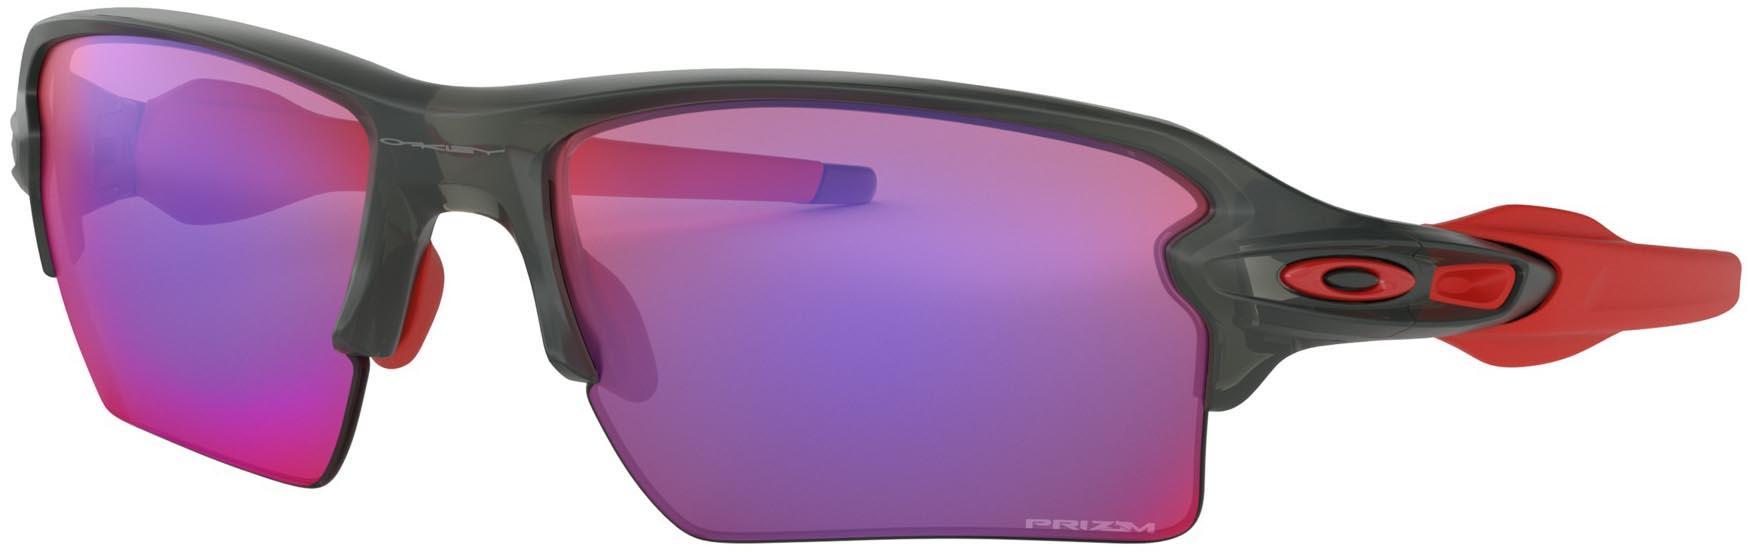 Oakley Flak 2.0 Xl Prizm Road Sunglasses - Grey